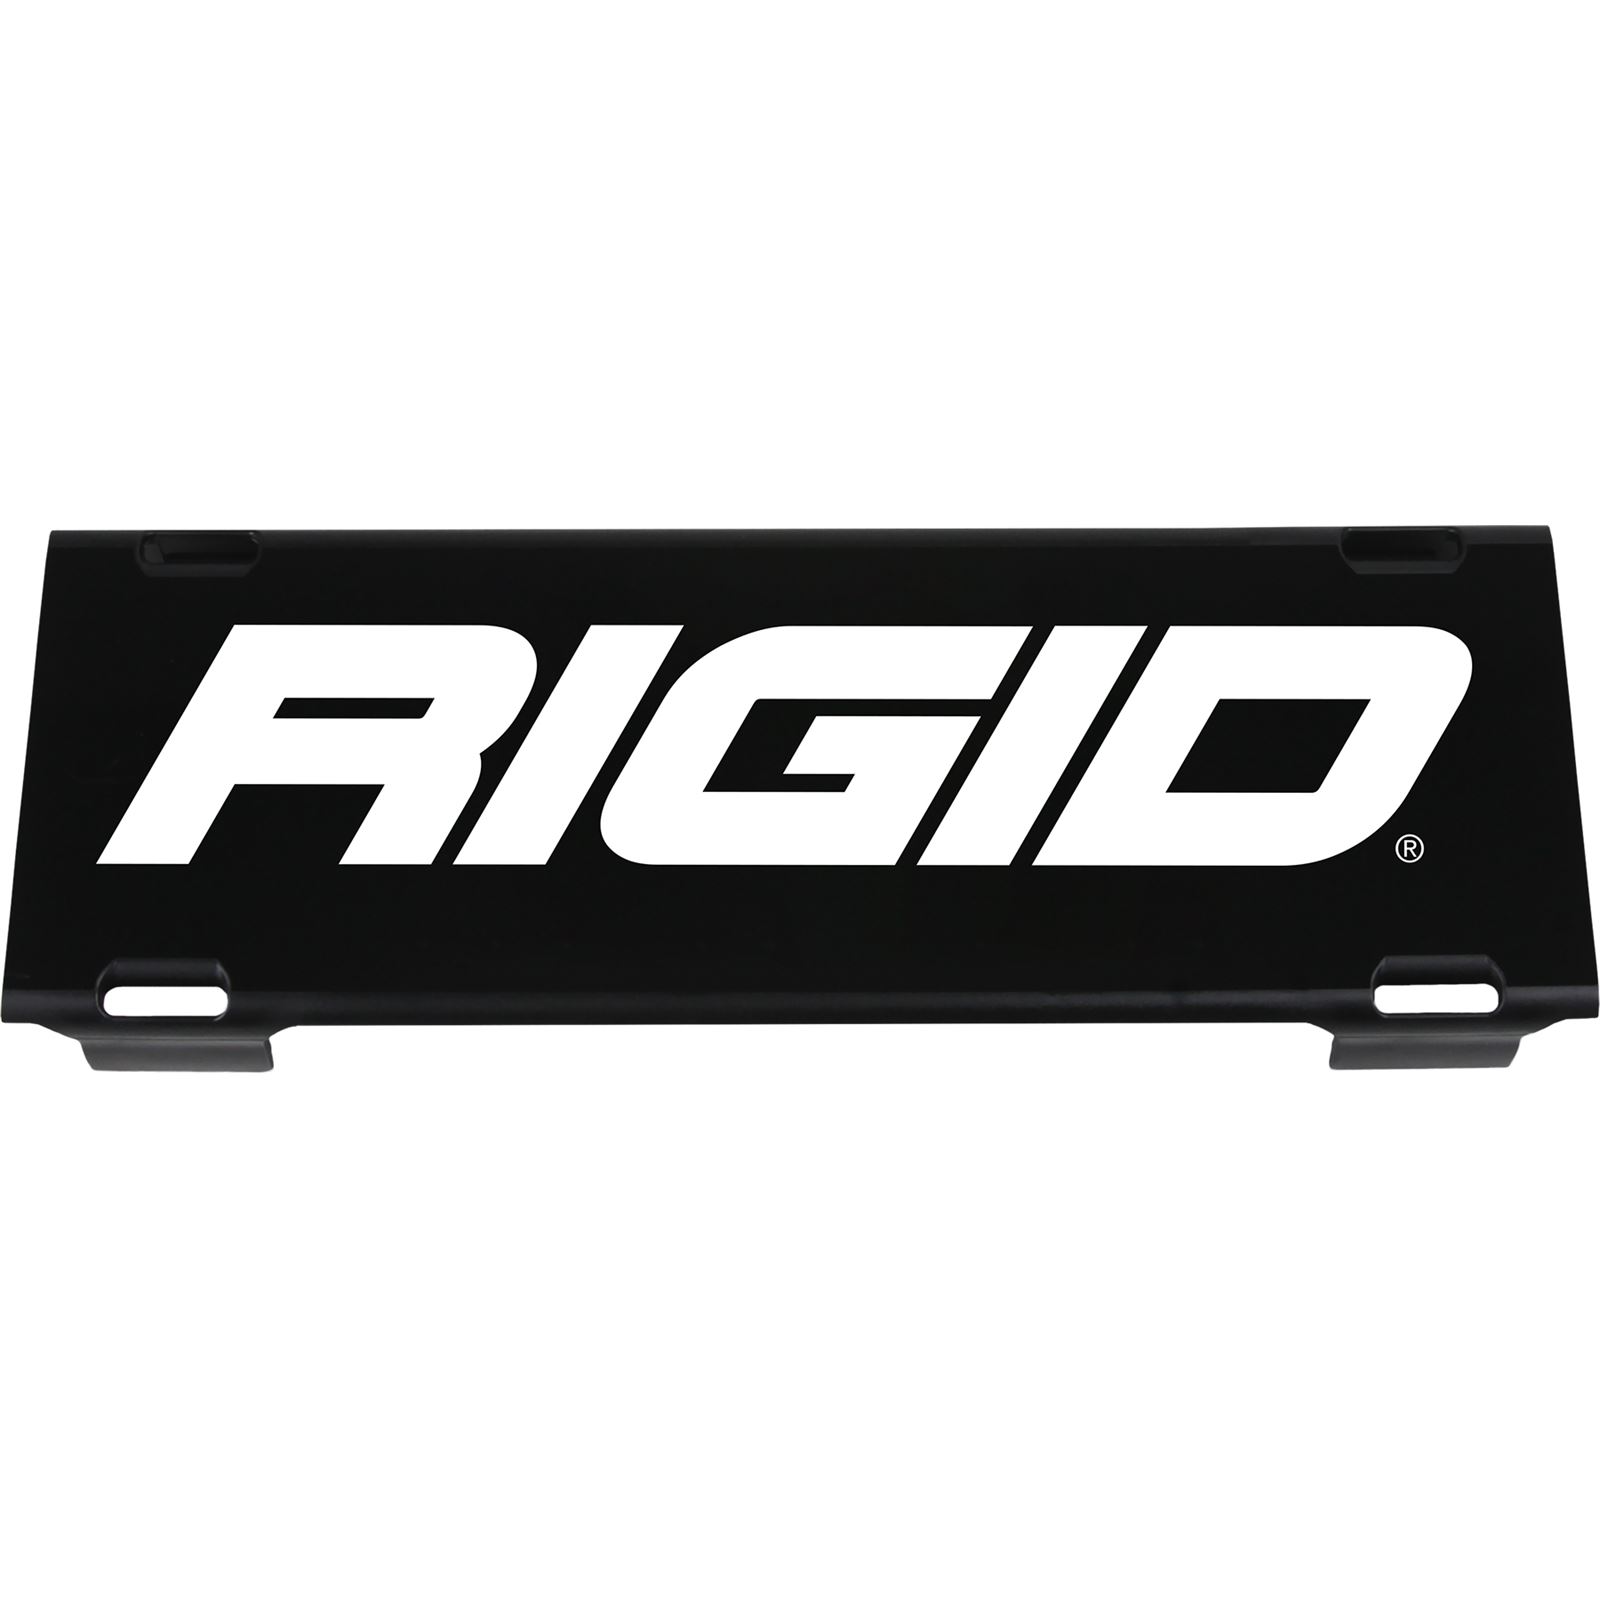 Rigid RDS Pro Series Light Cover Green 11" 105583